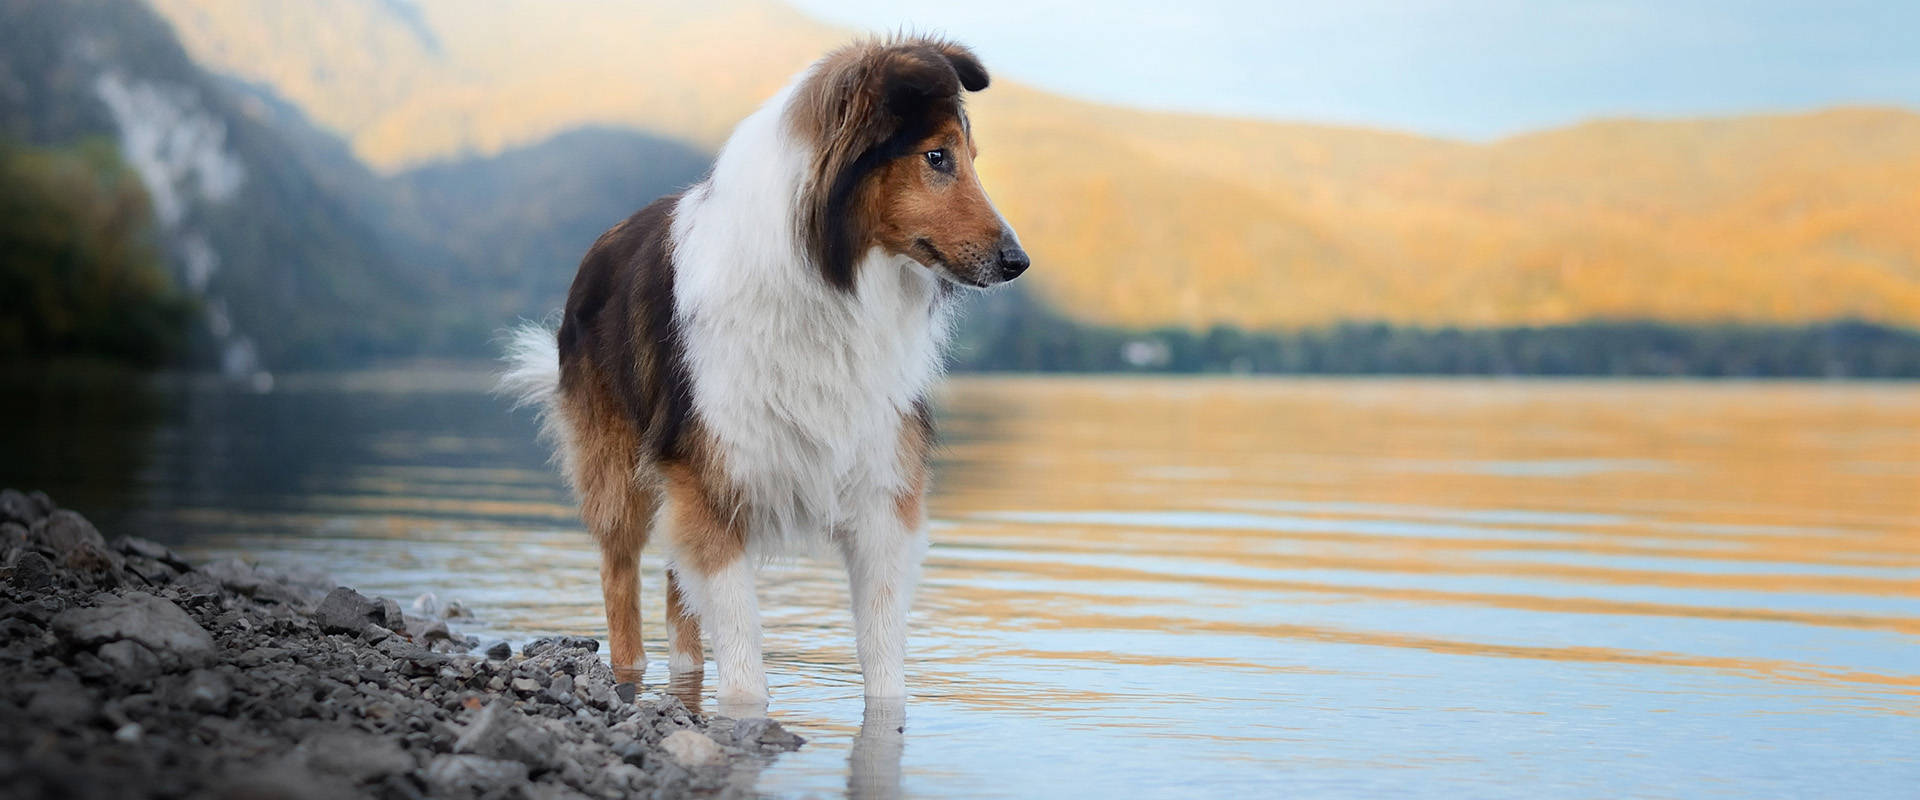 Hund (Sheltie) am Seeufer